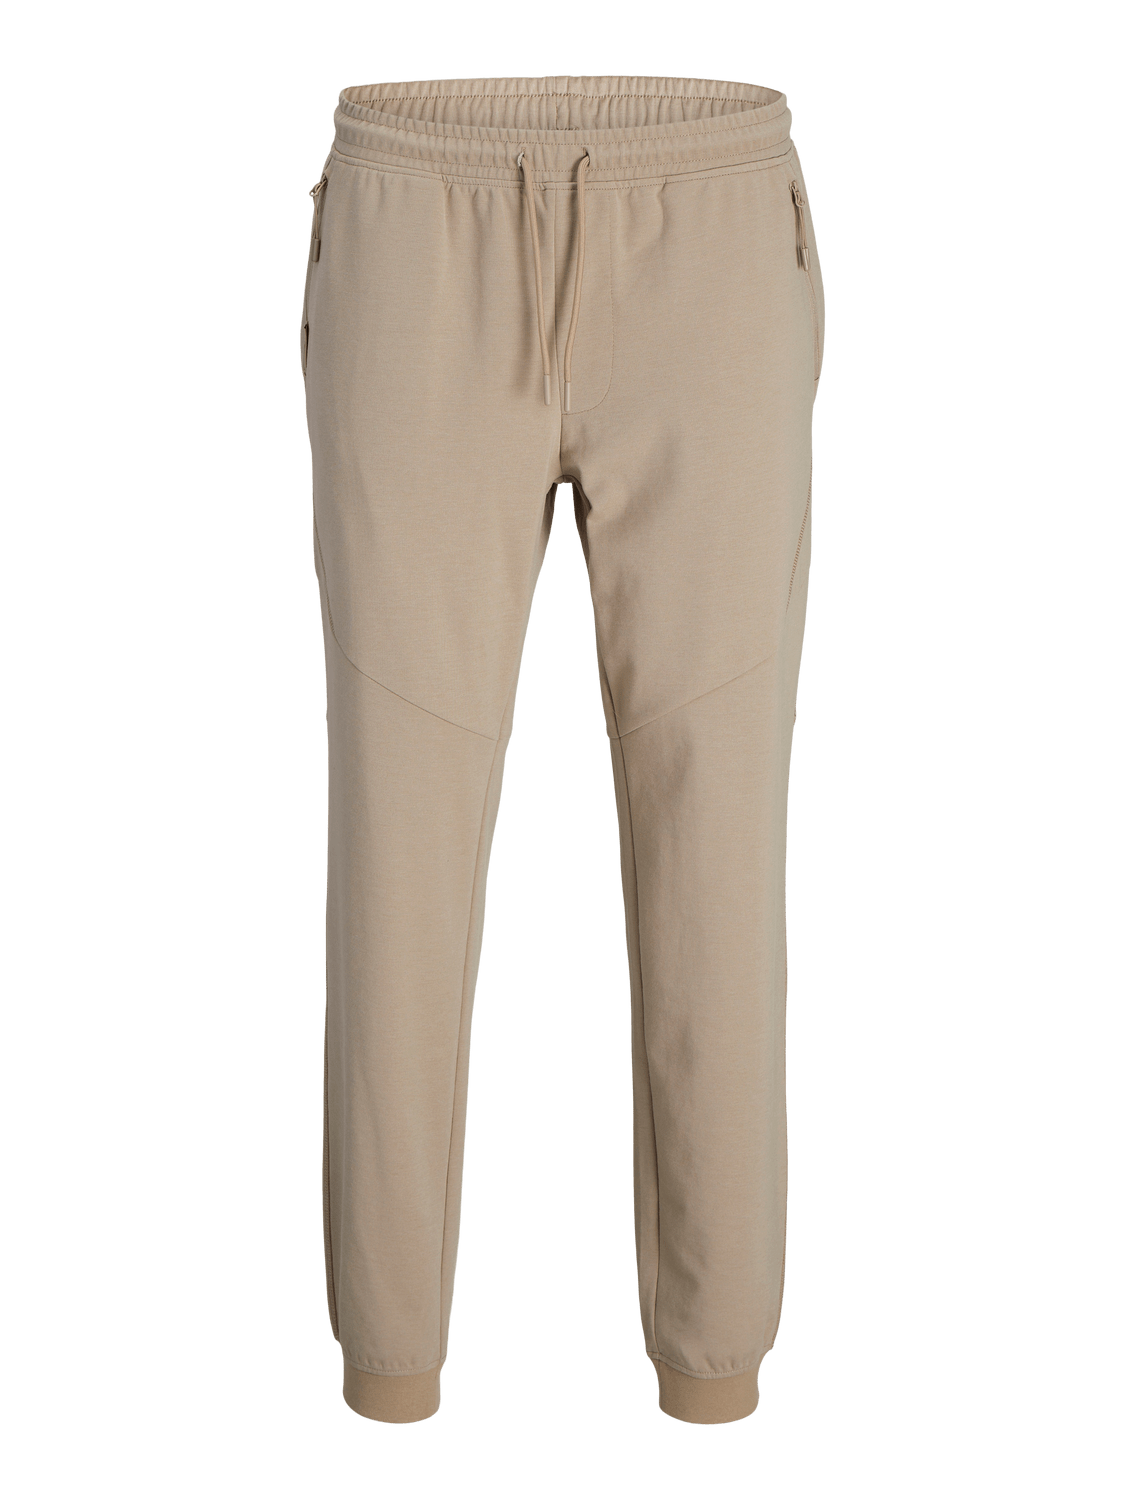 Pantalones jogger chándal beige -JPSTWILL